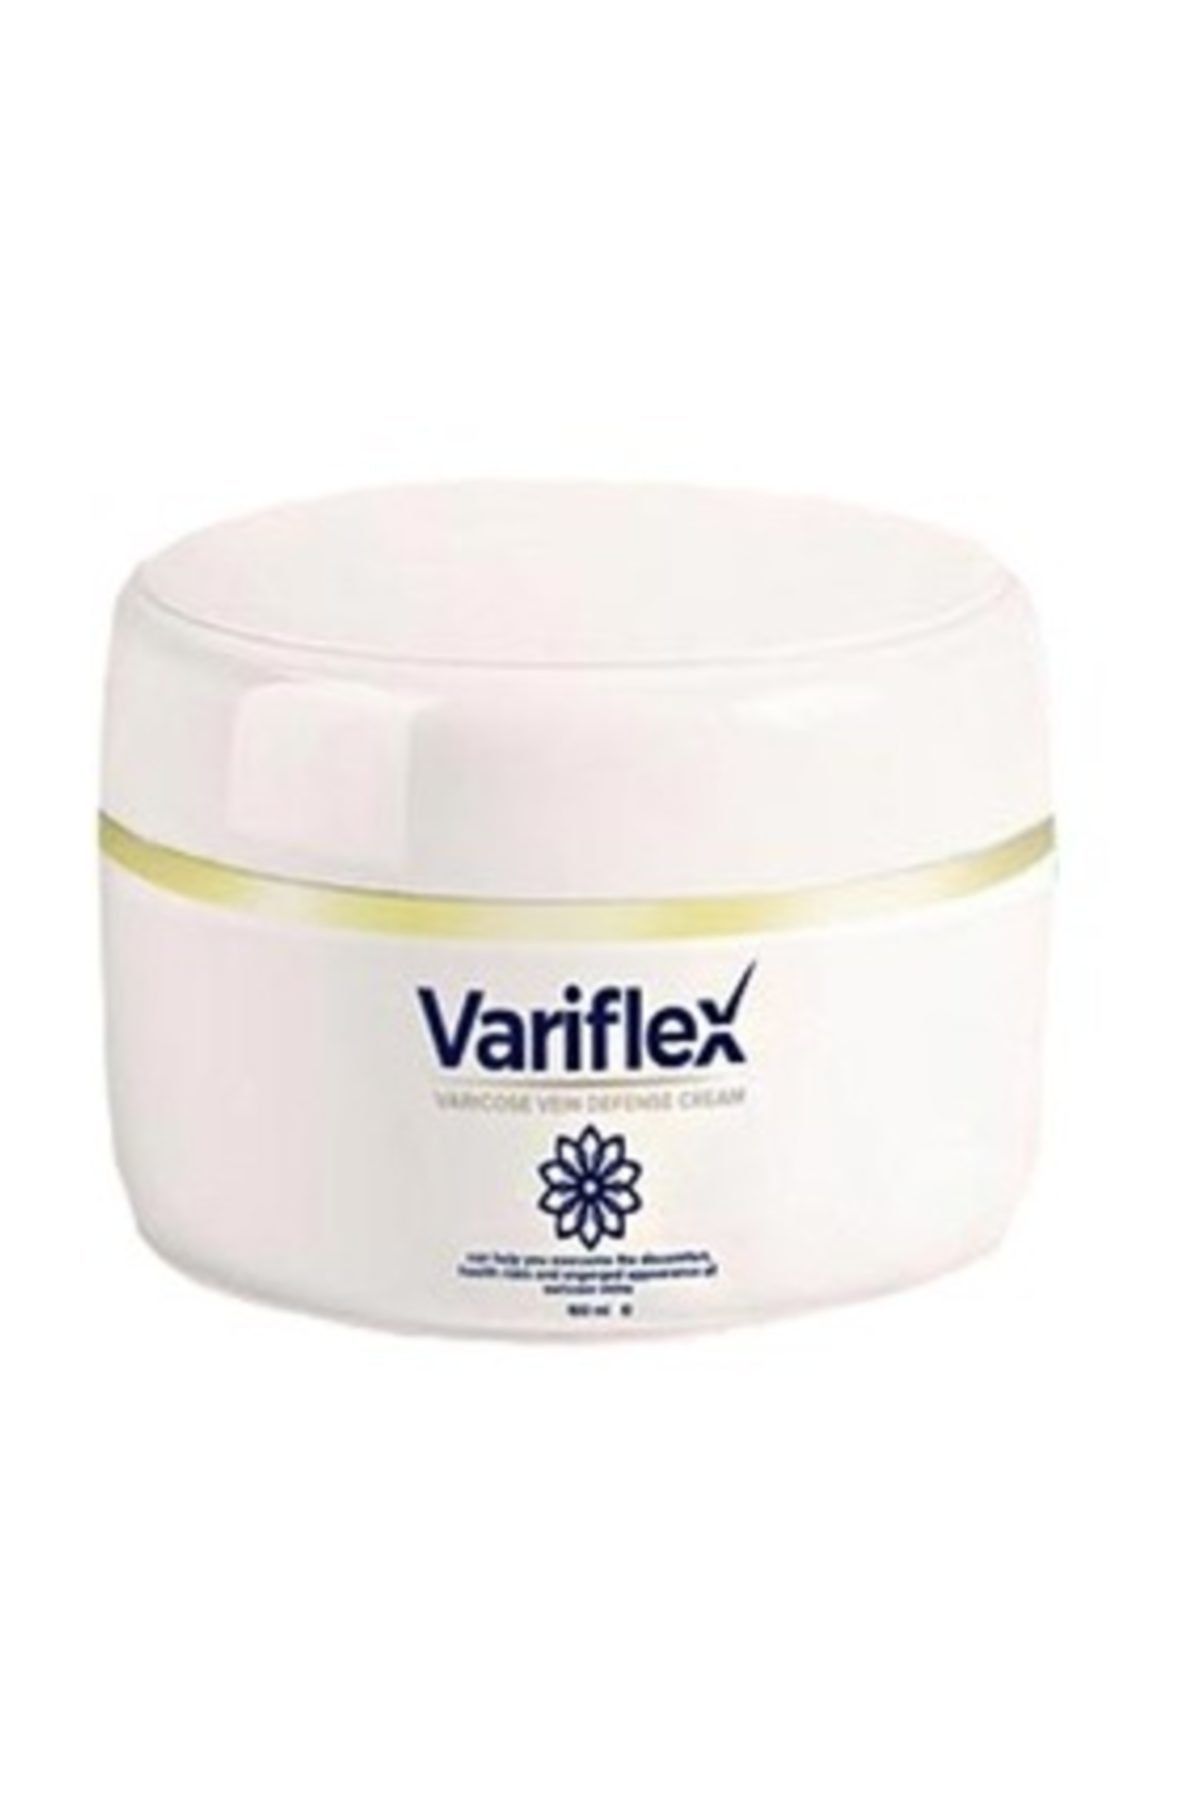 Genel Markalar 3 Adet Variflex Varicoseveindefense Cream 100ml Varise Son Unisex